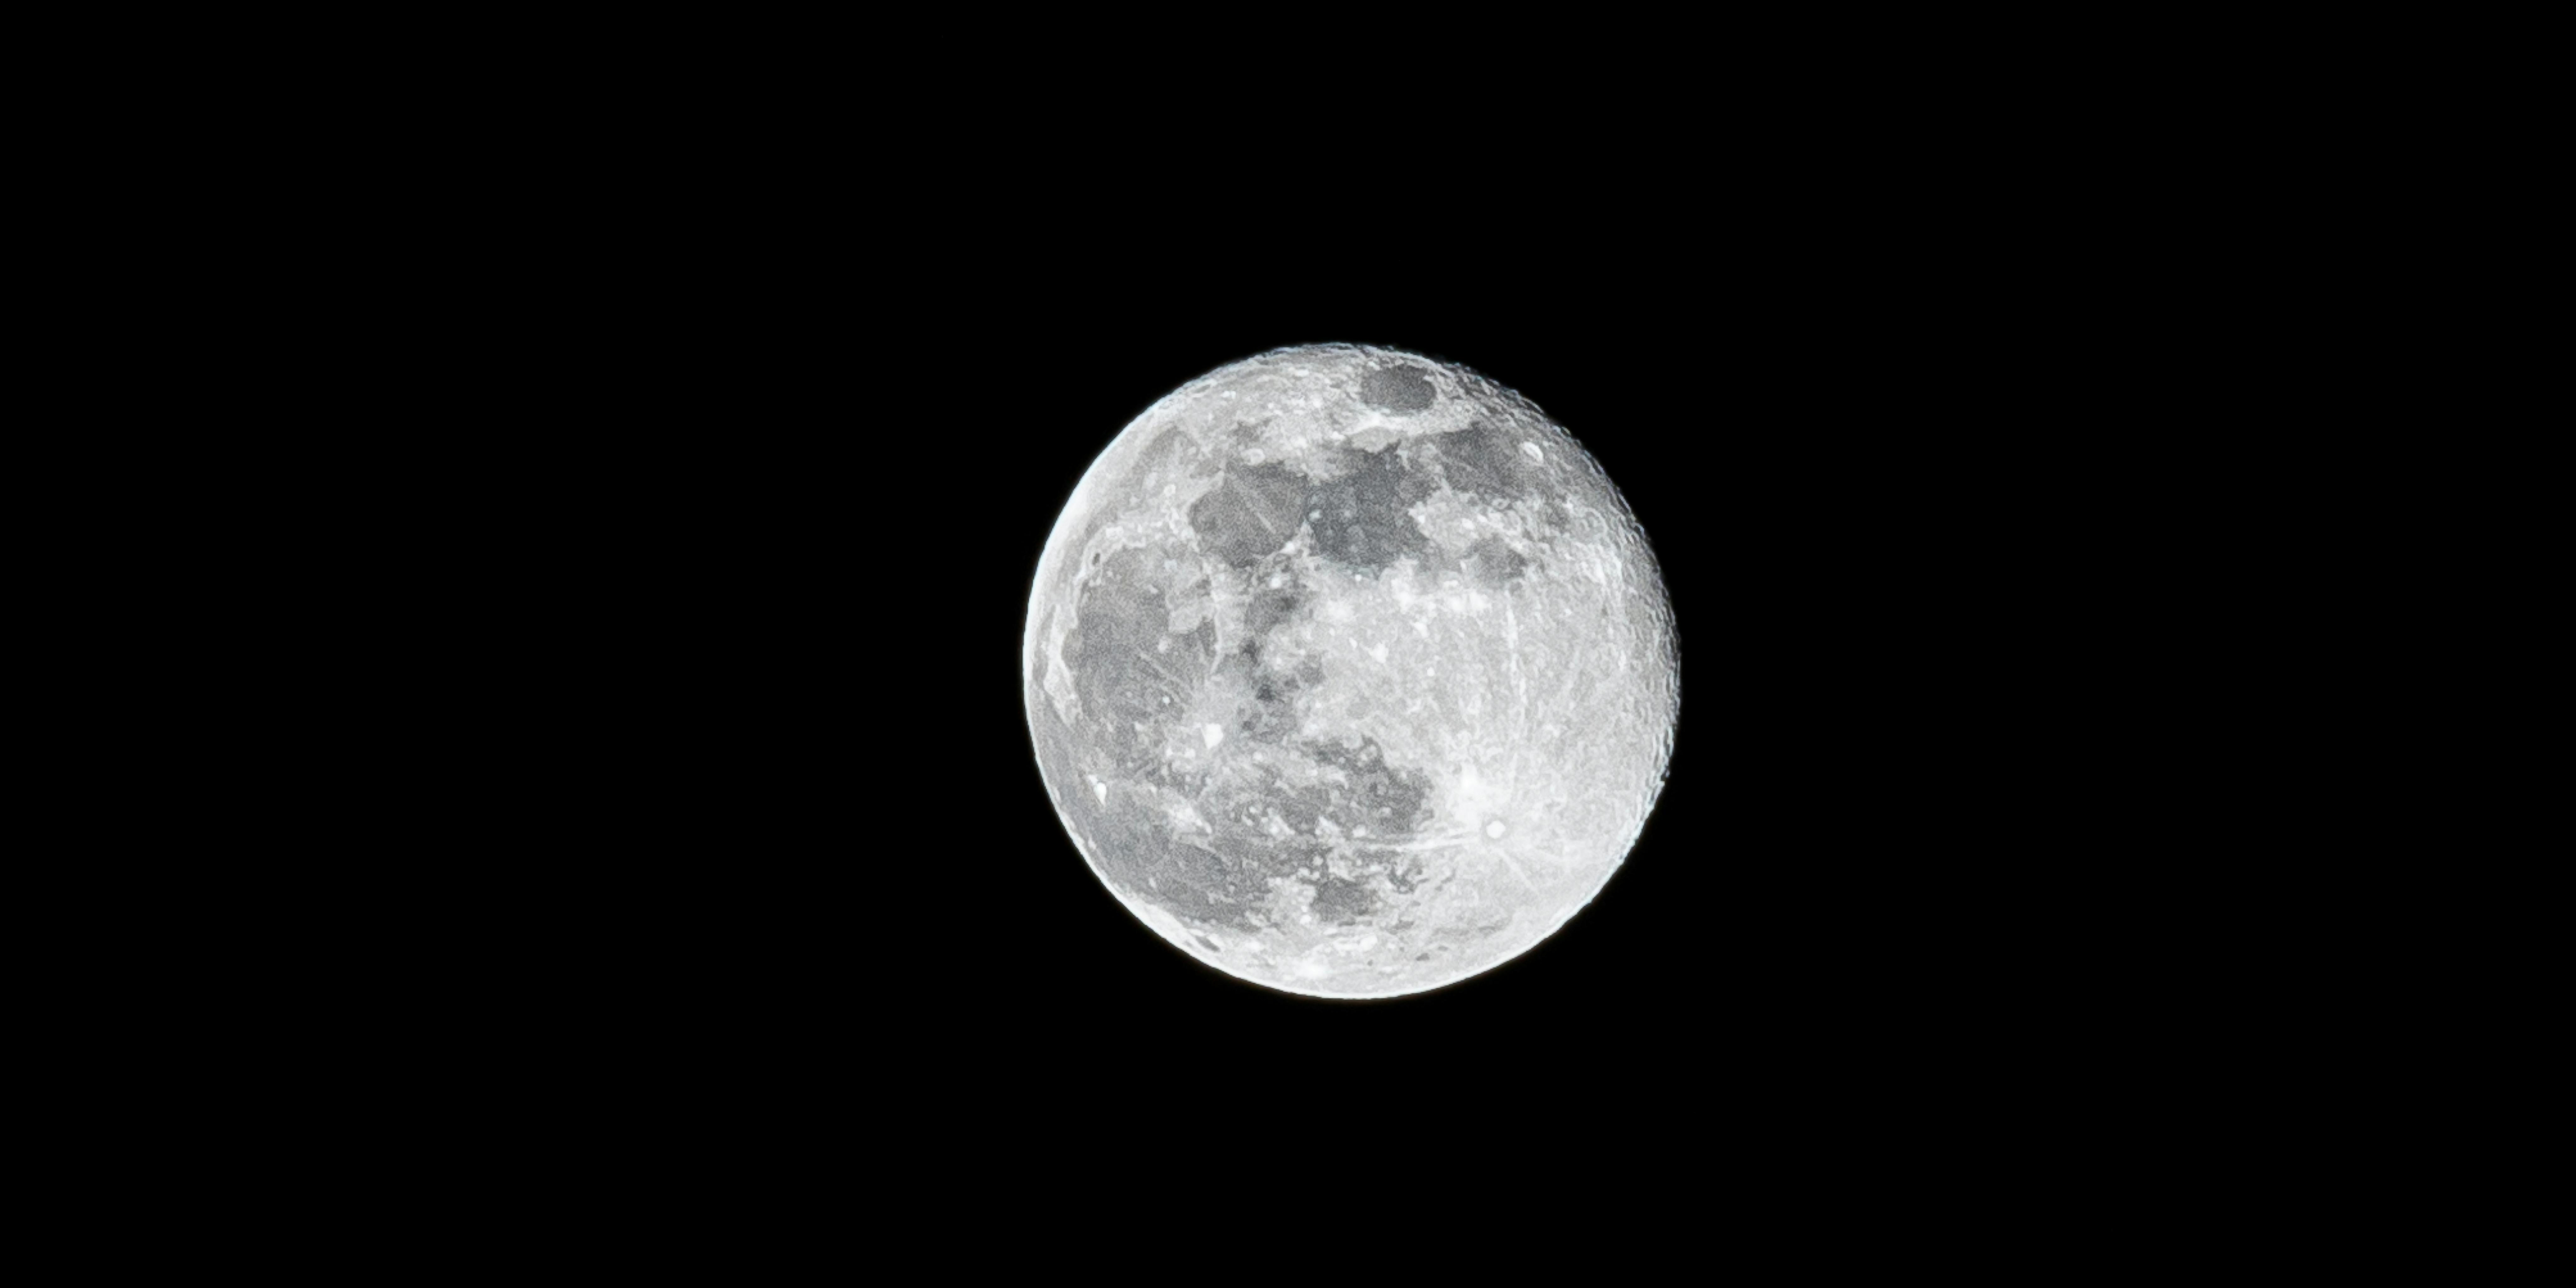 Full moon on black background at night · Free Stock Photo